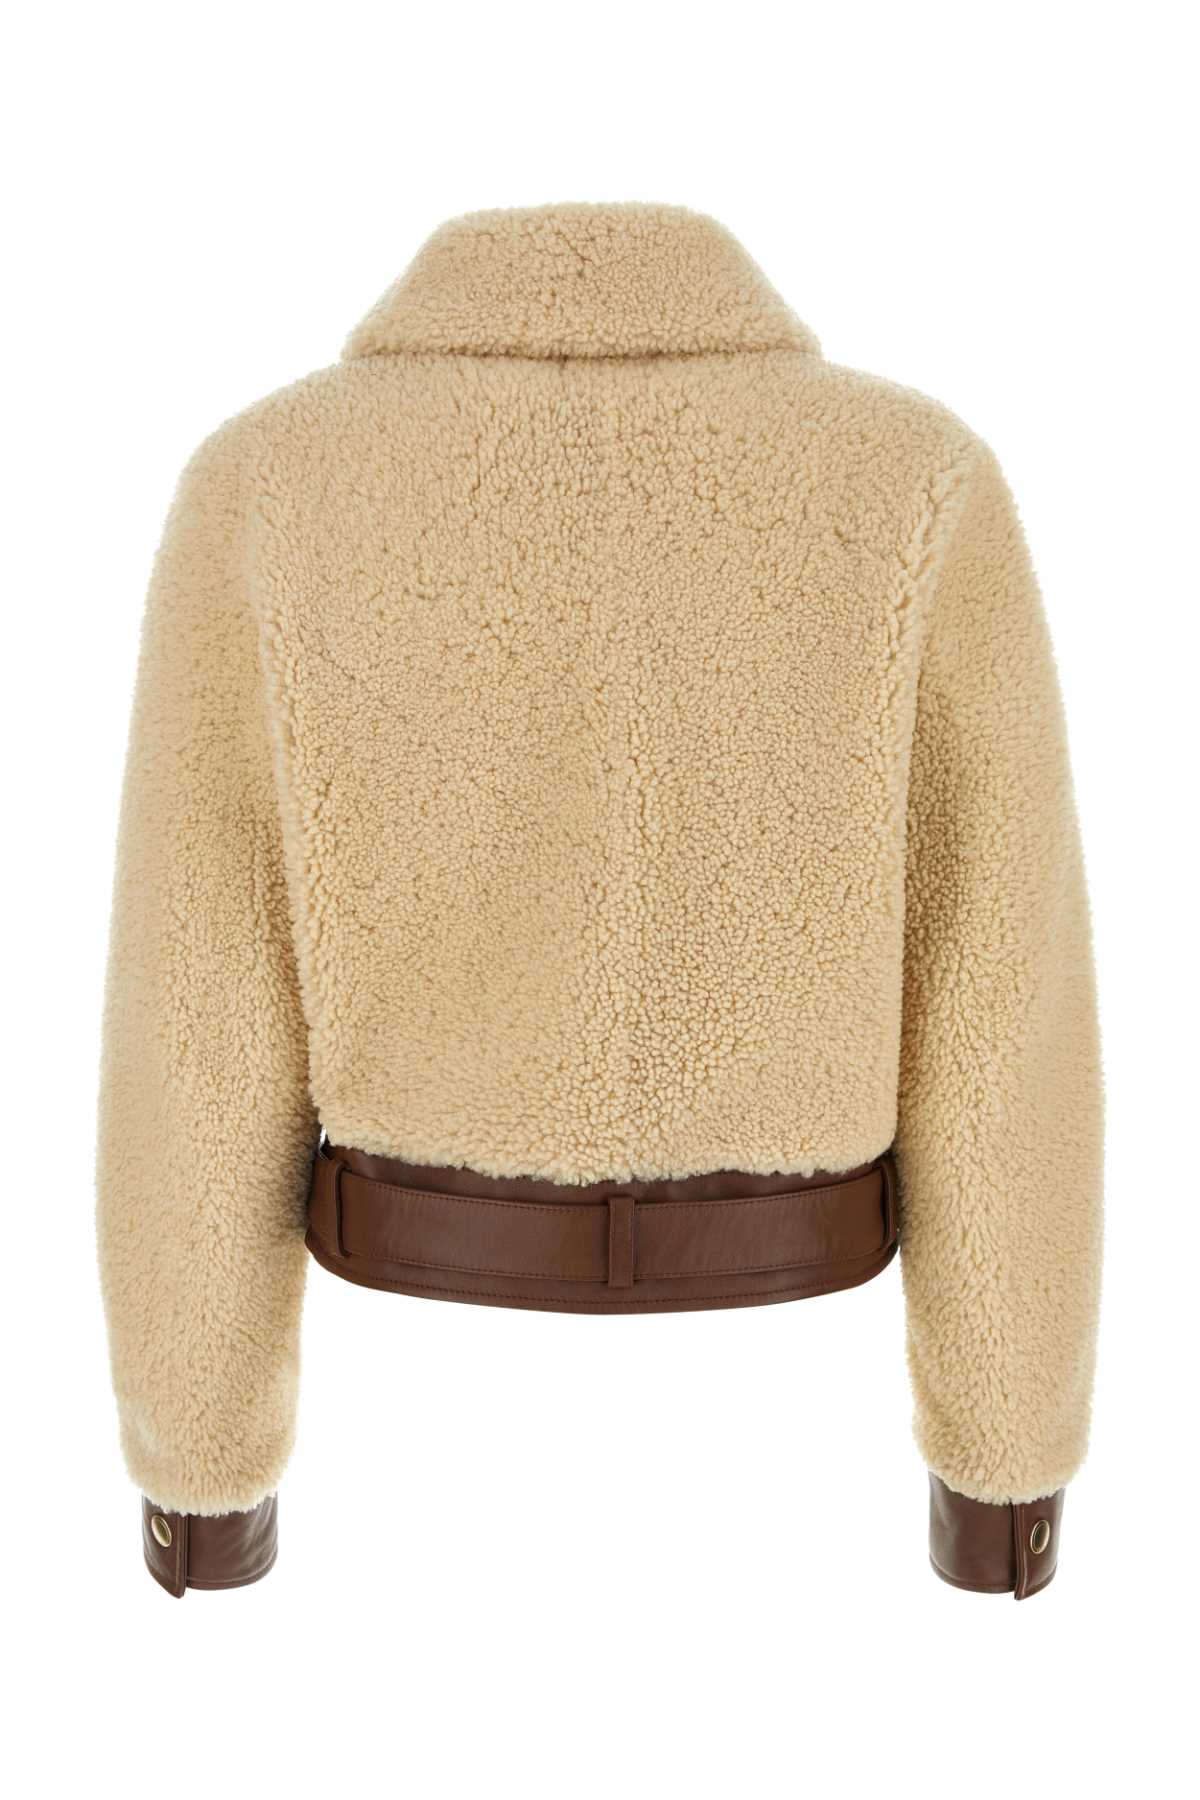 Chloé Sand Shearling Jacket In Whisperwhite